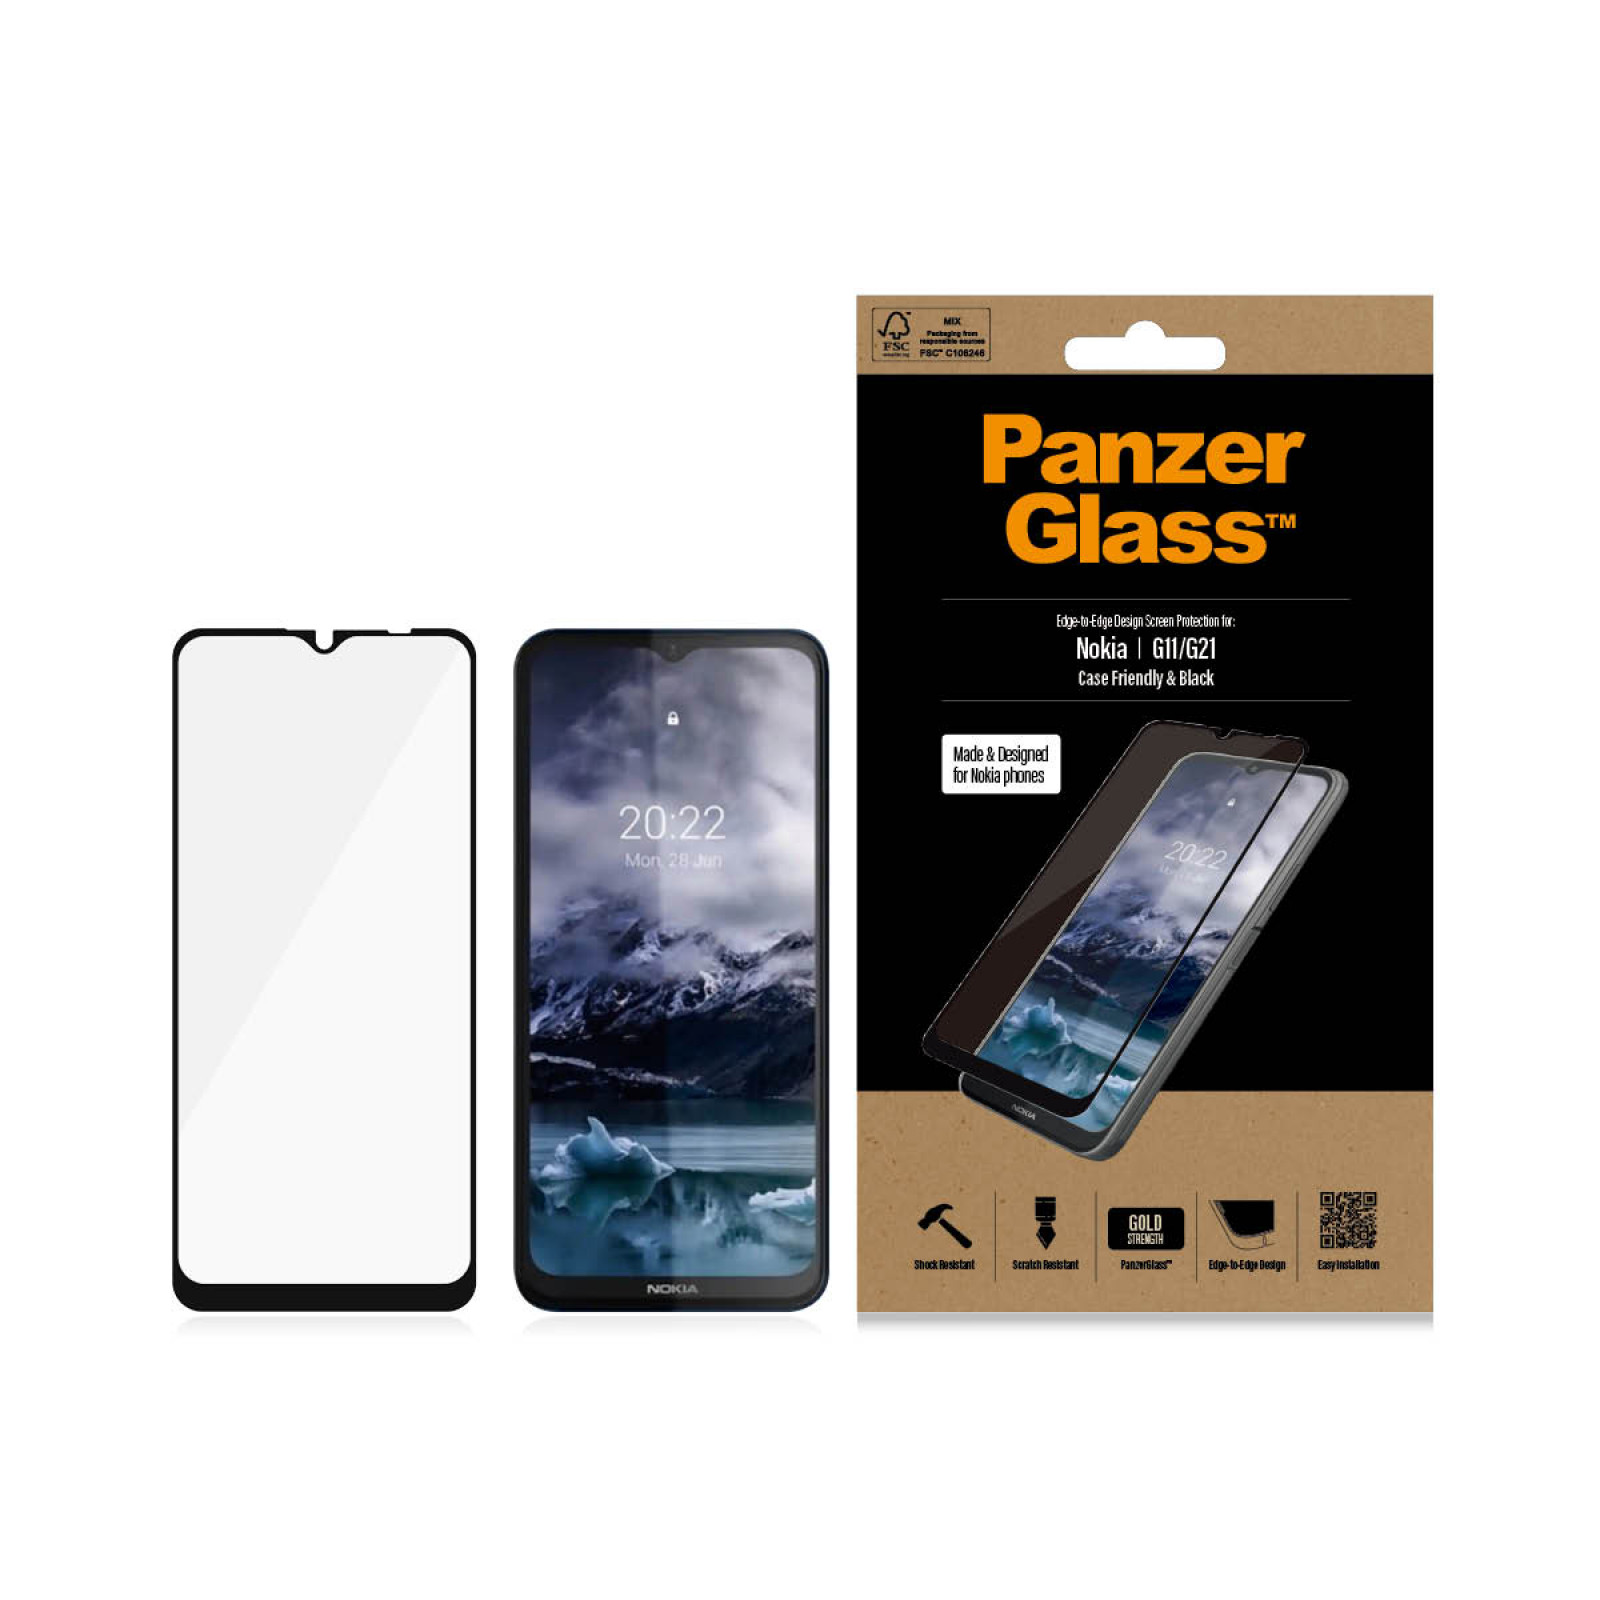 Стъклен протектор PanzerGlass за Nokia G11/G21 CaseFriendly - Черен